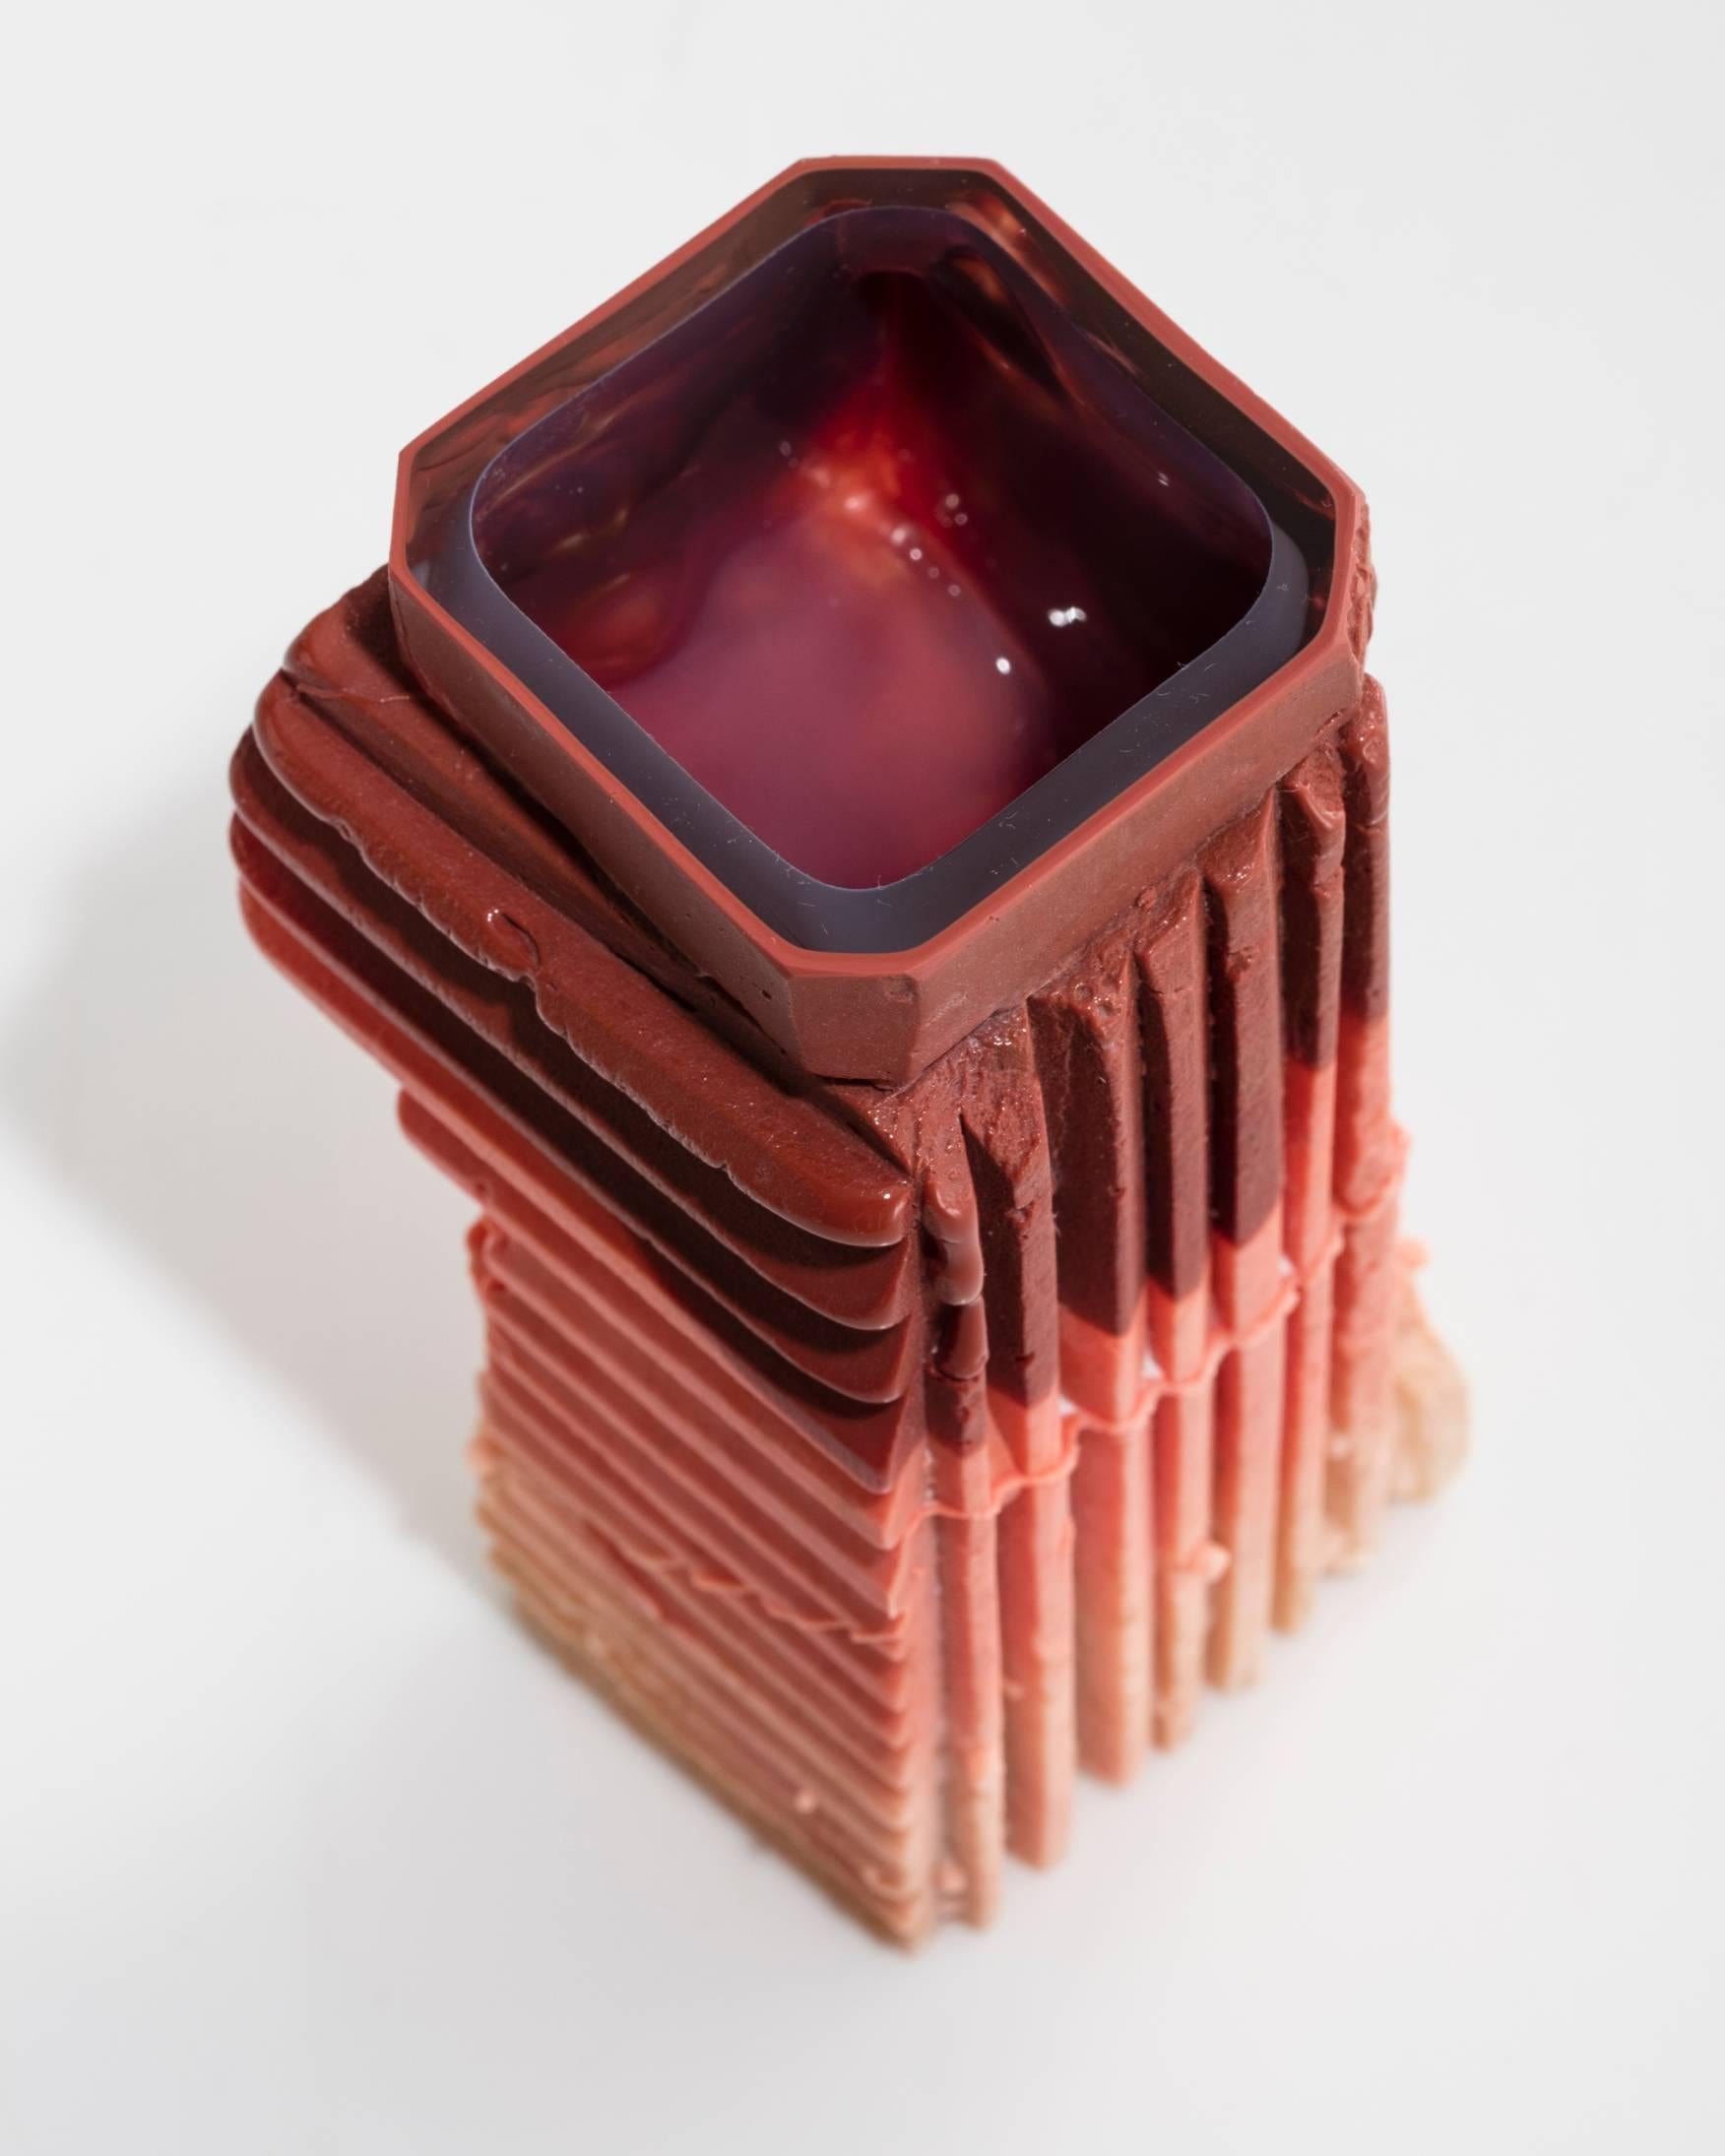 American Unique Assemblage Vessel in Handblown Glass by Thaddeus Wolfe, 2015